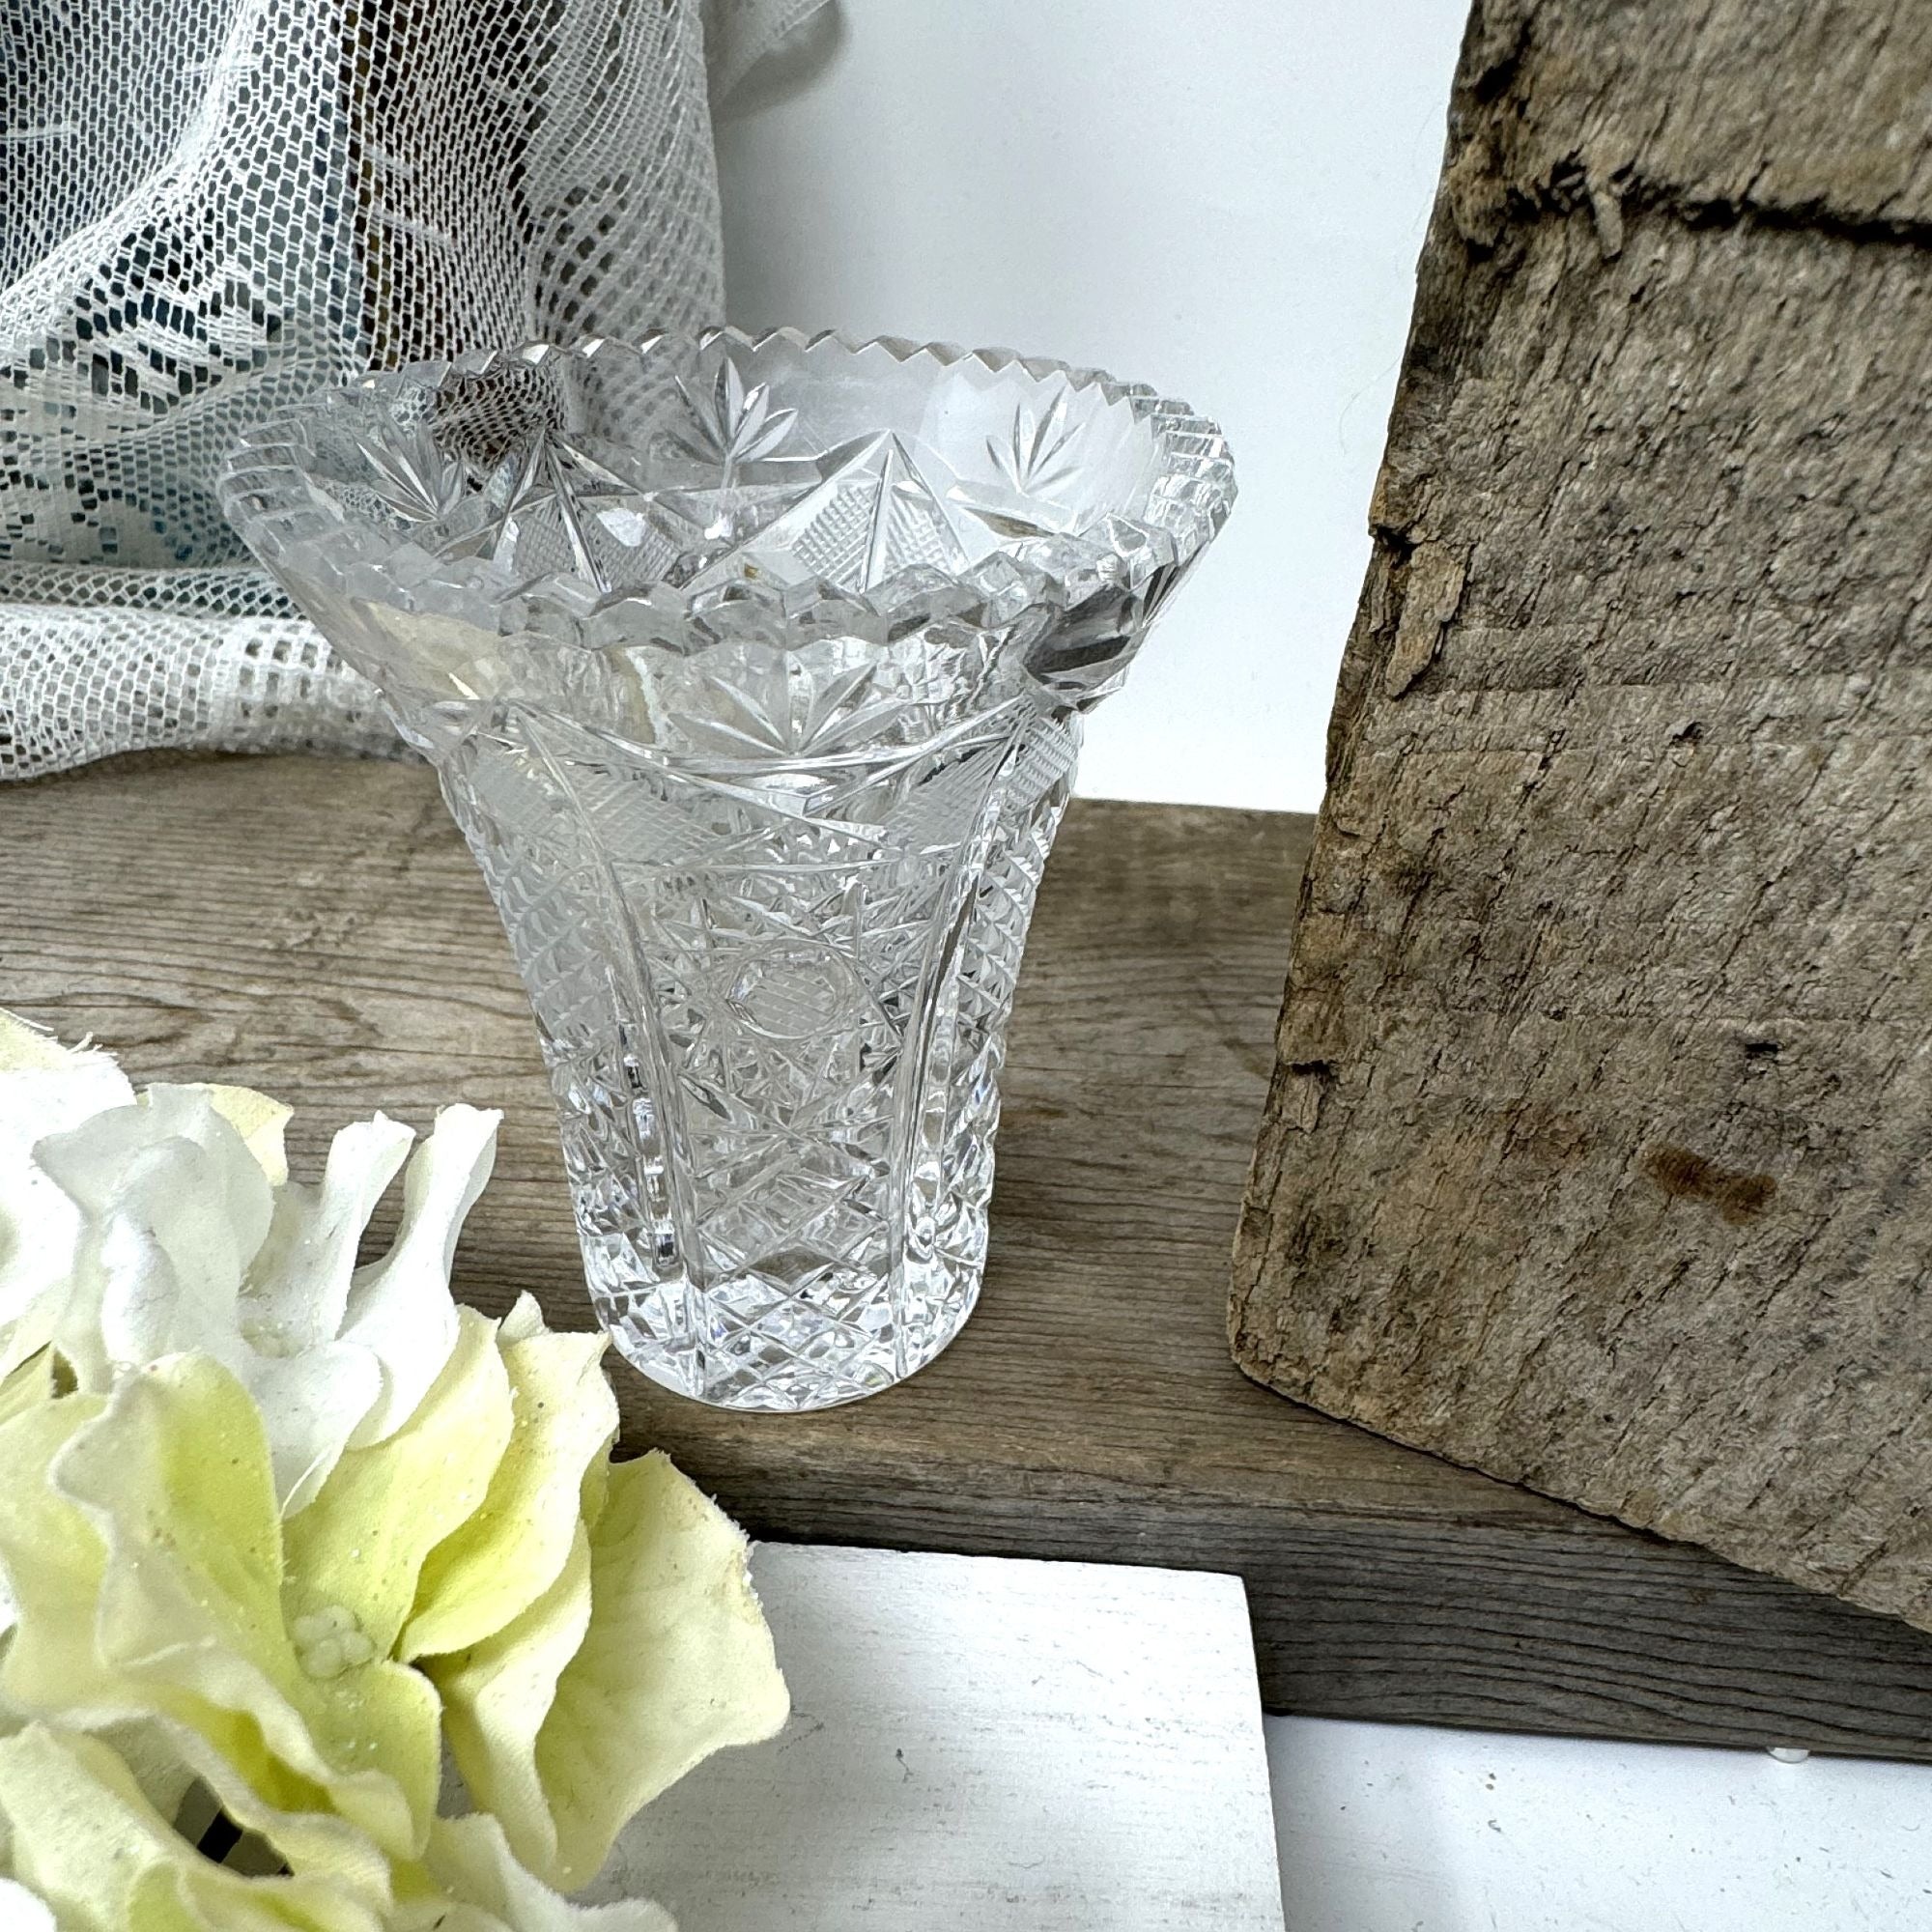 Vintage Clear Crystal Bud Vase Stunning Cut Patterns 3.5"